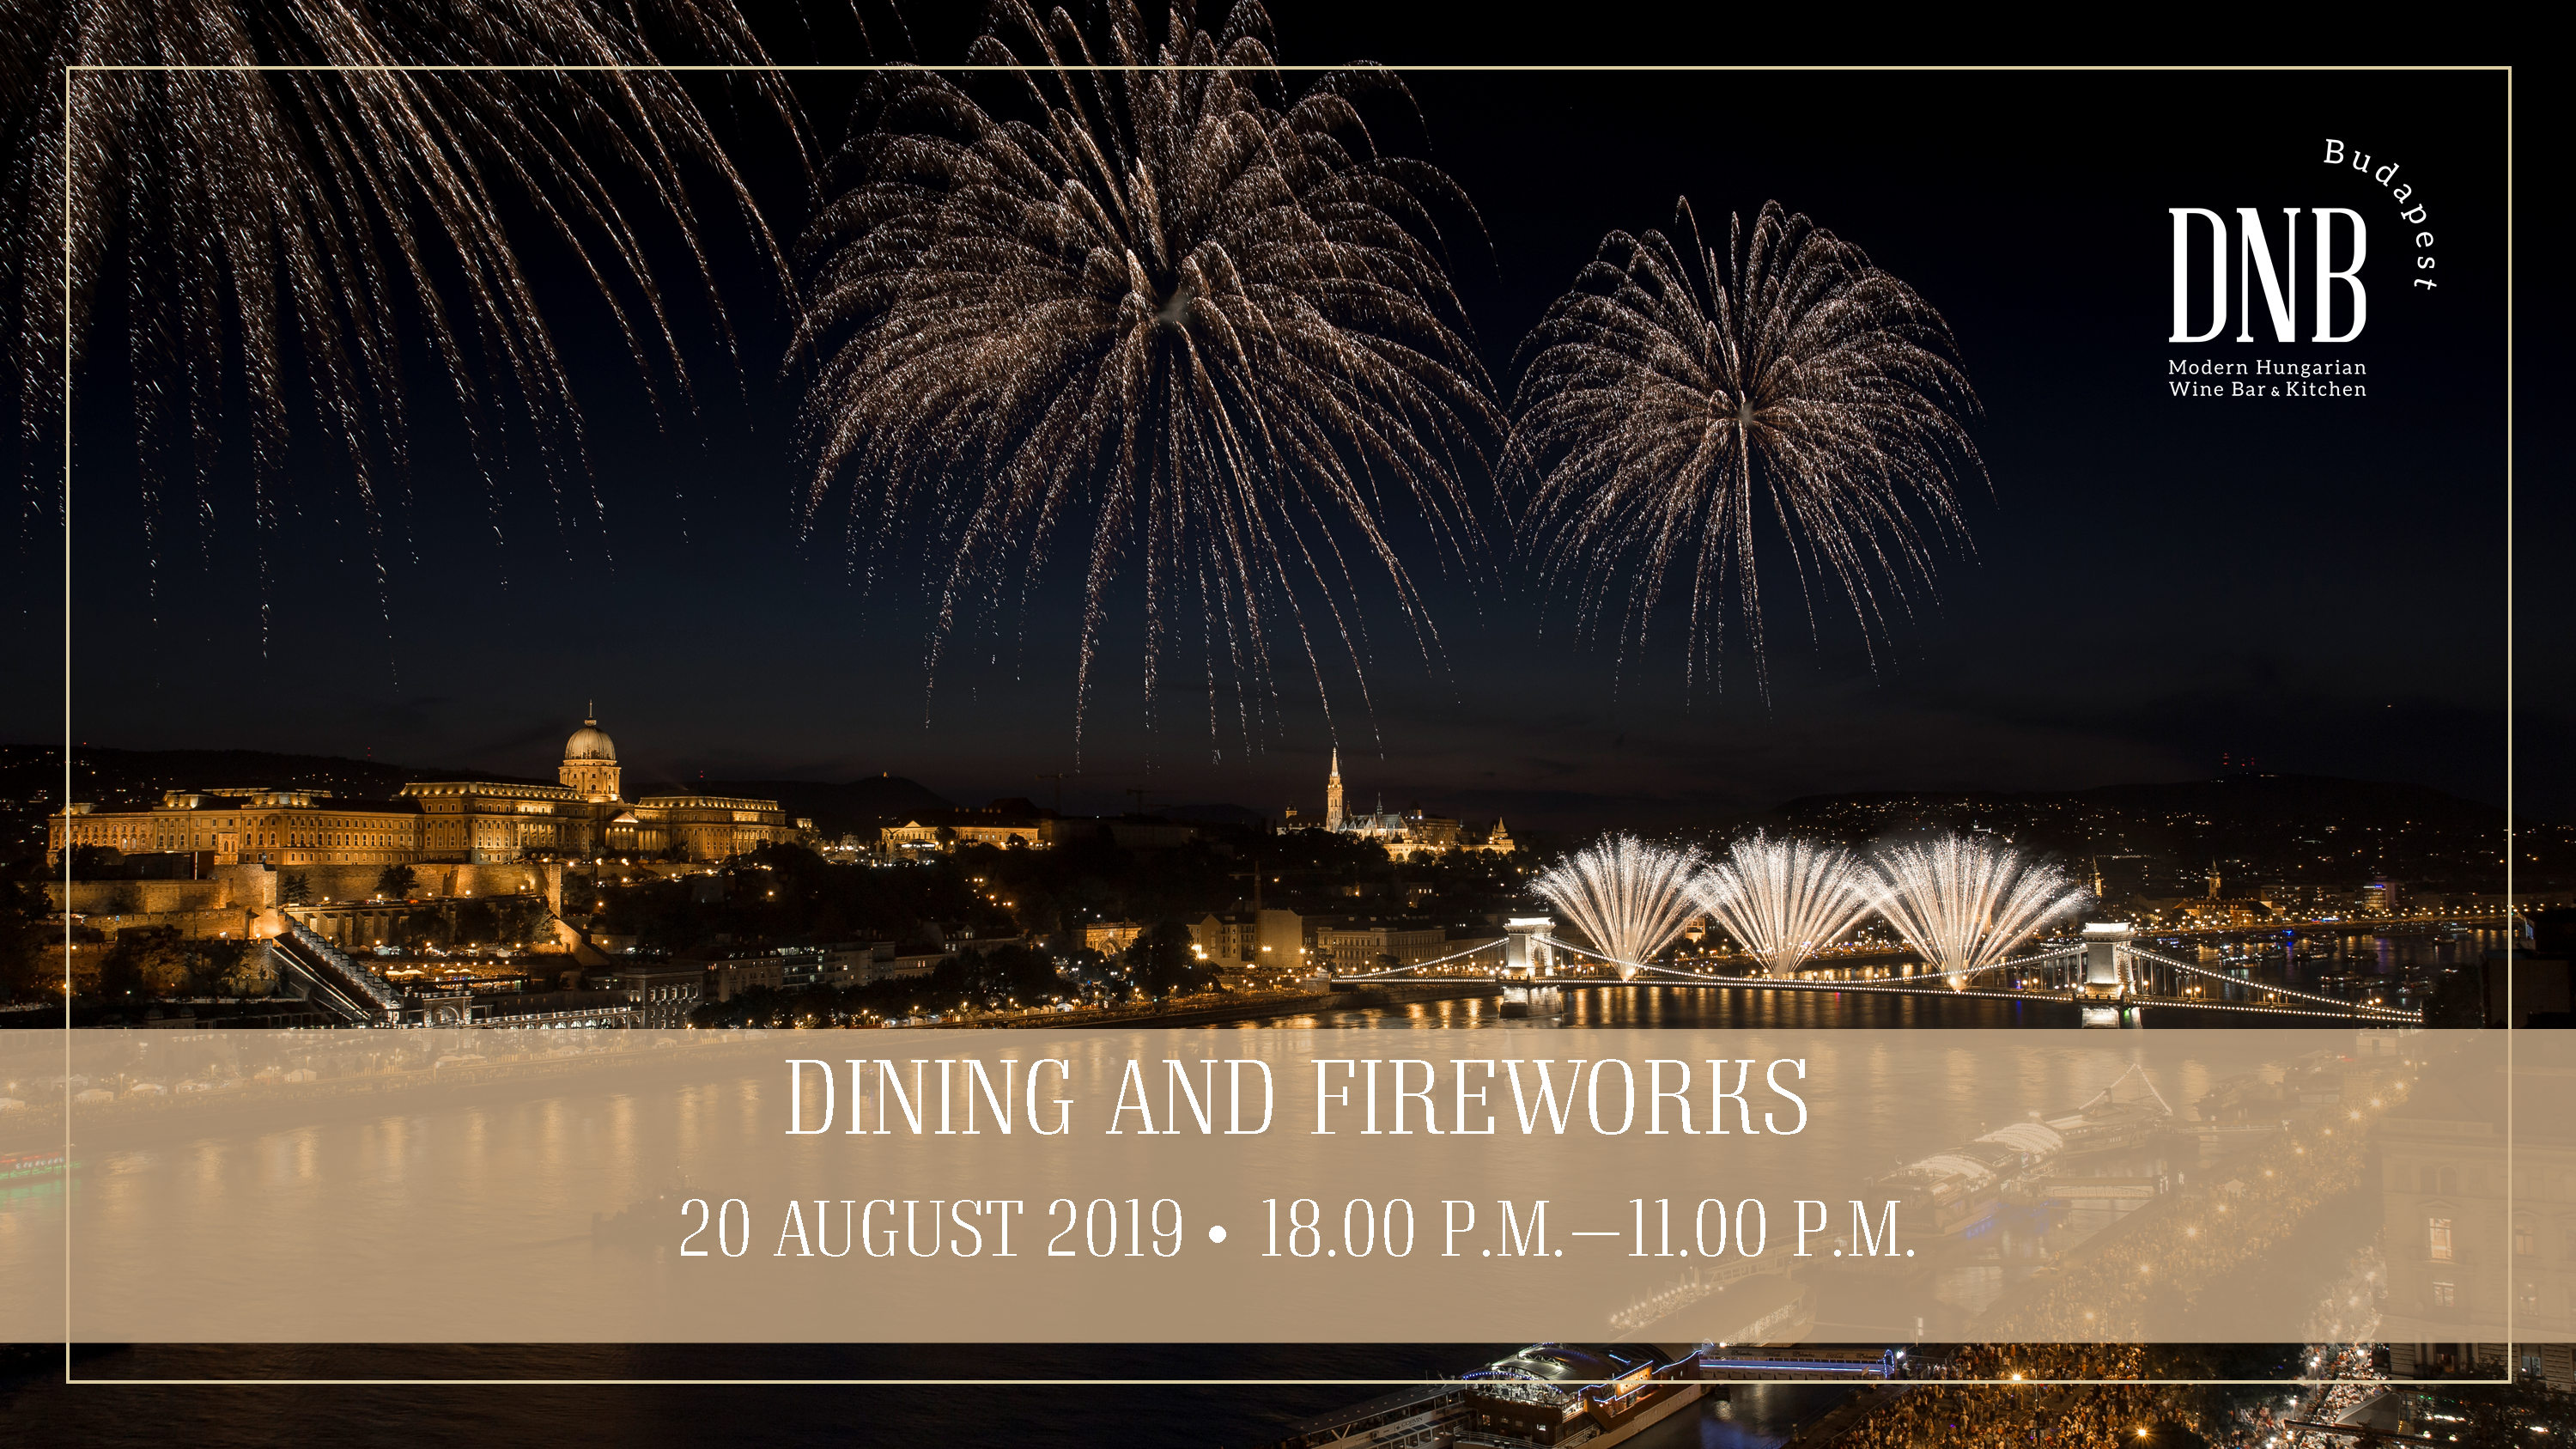 Fine Dining & Fireworks On 20 August @ Budapest Marriott Hotel